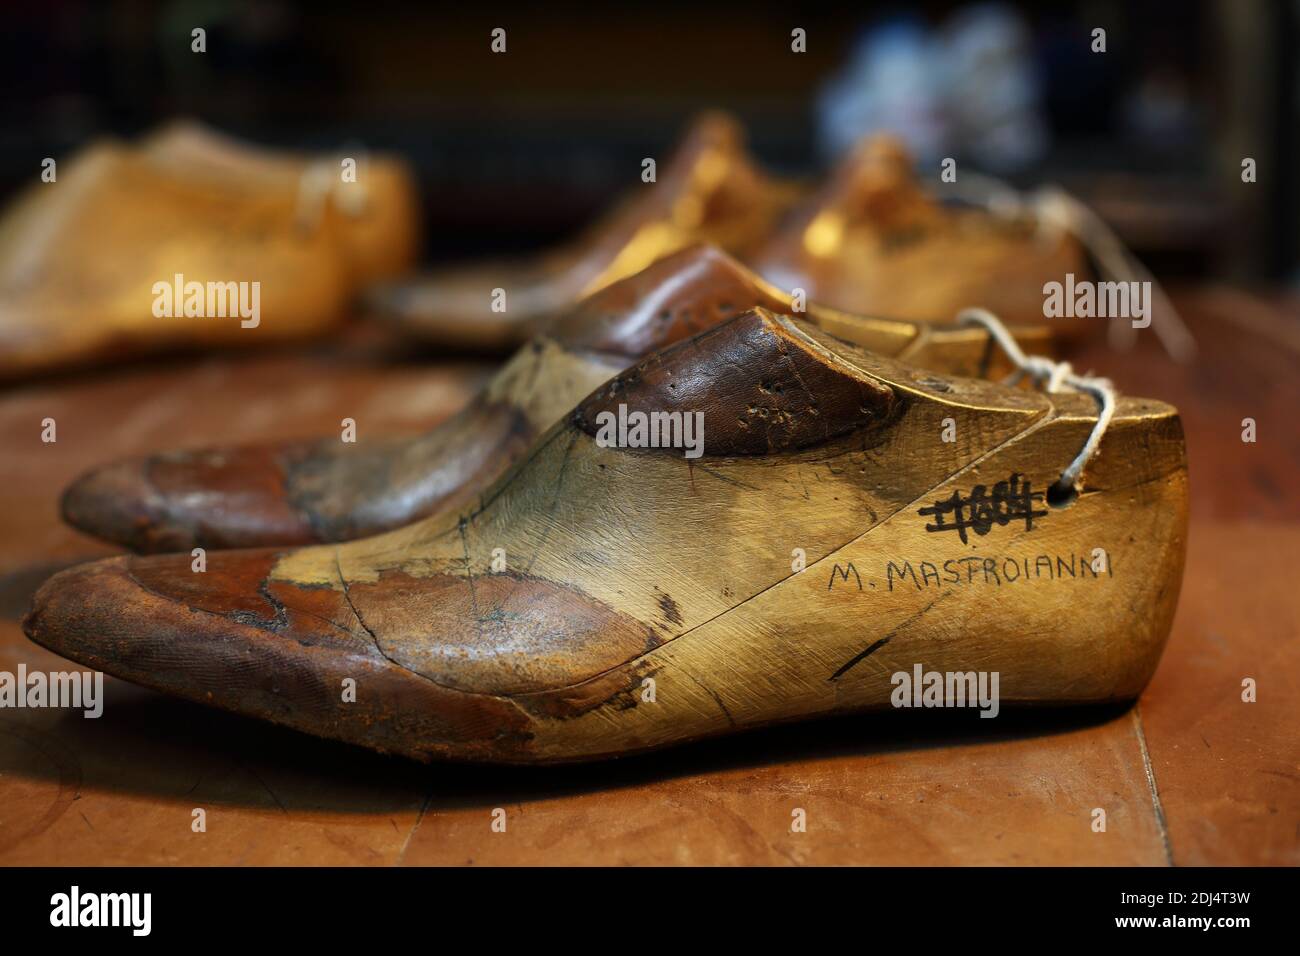 Der Schuh Last von Marcello Mastroianni Stockfoto